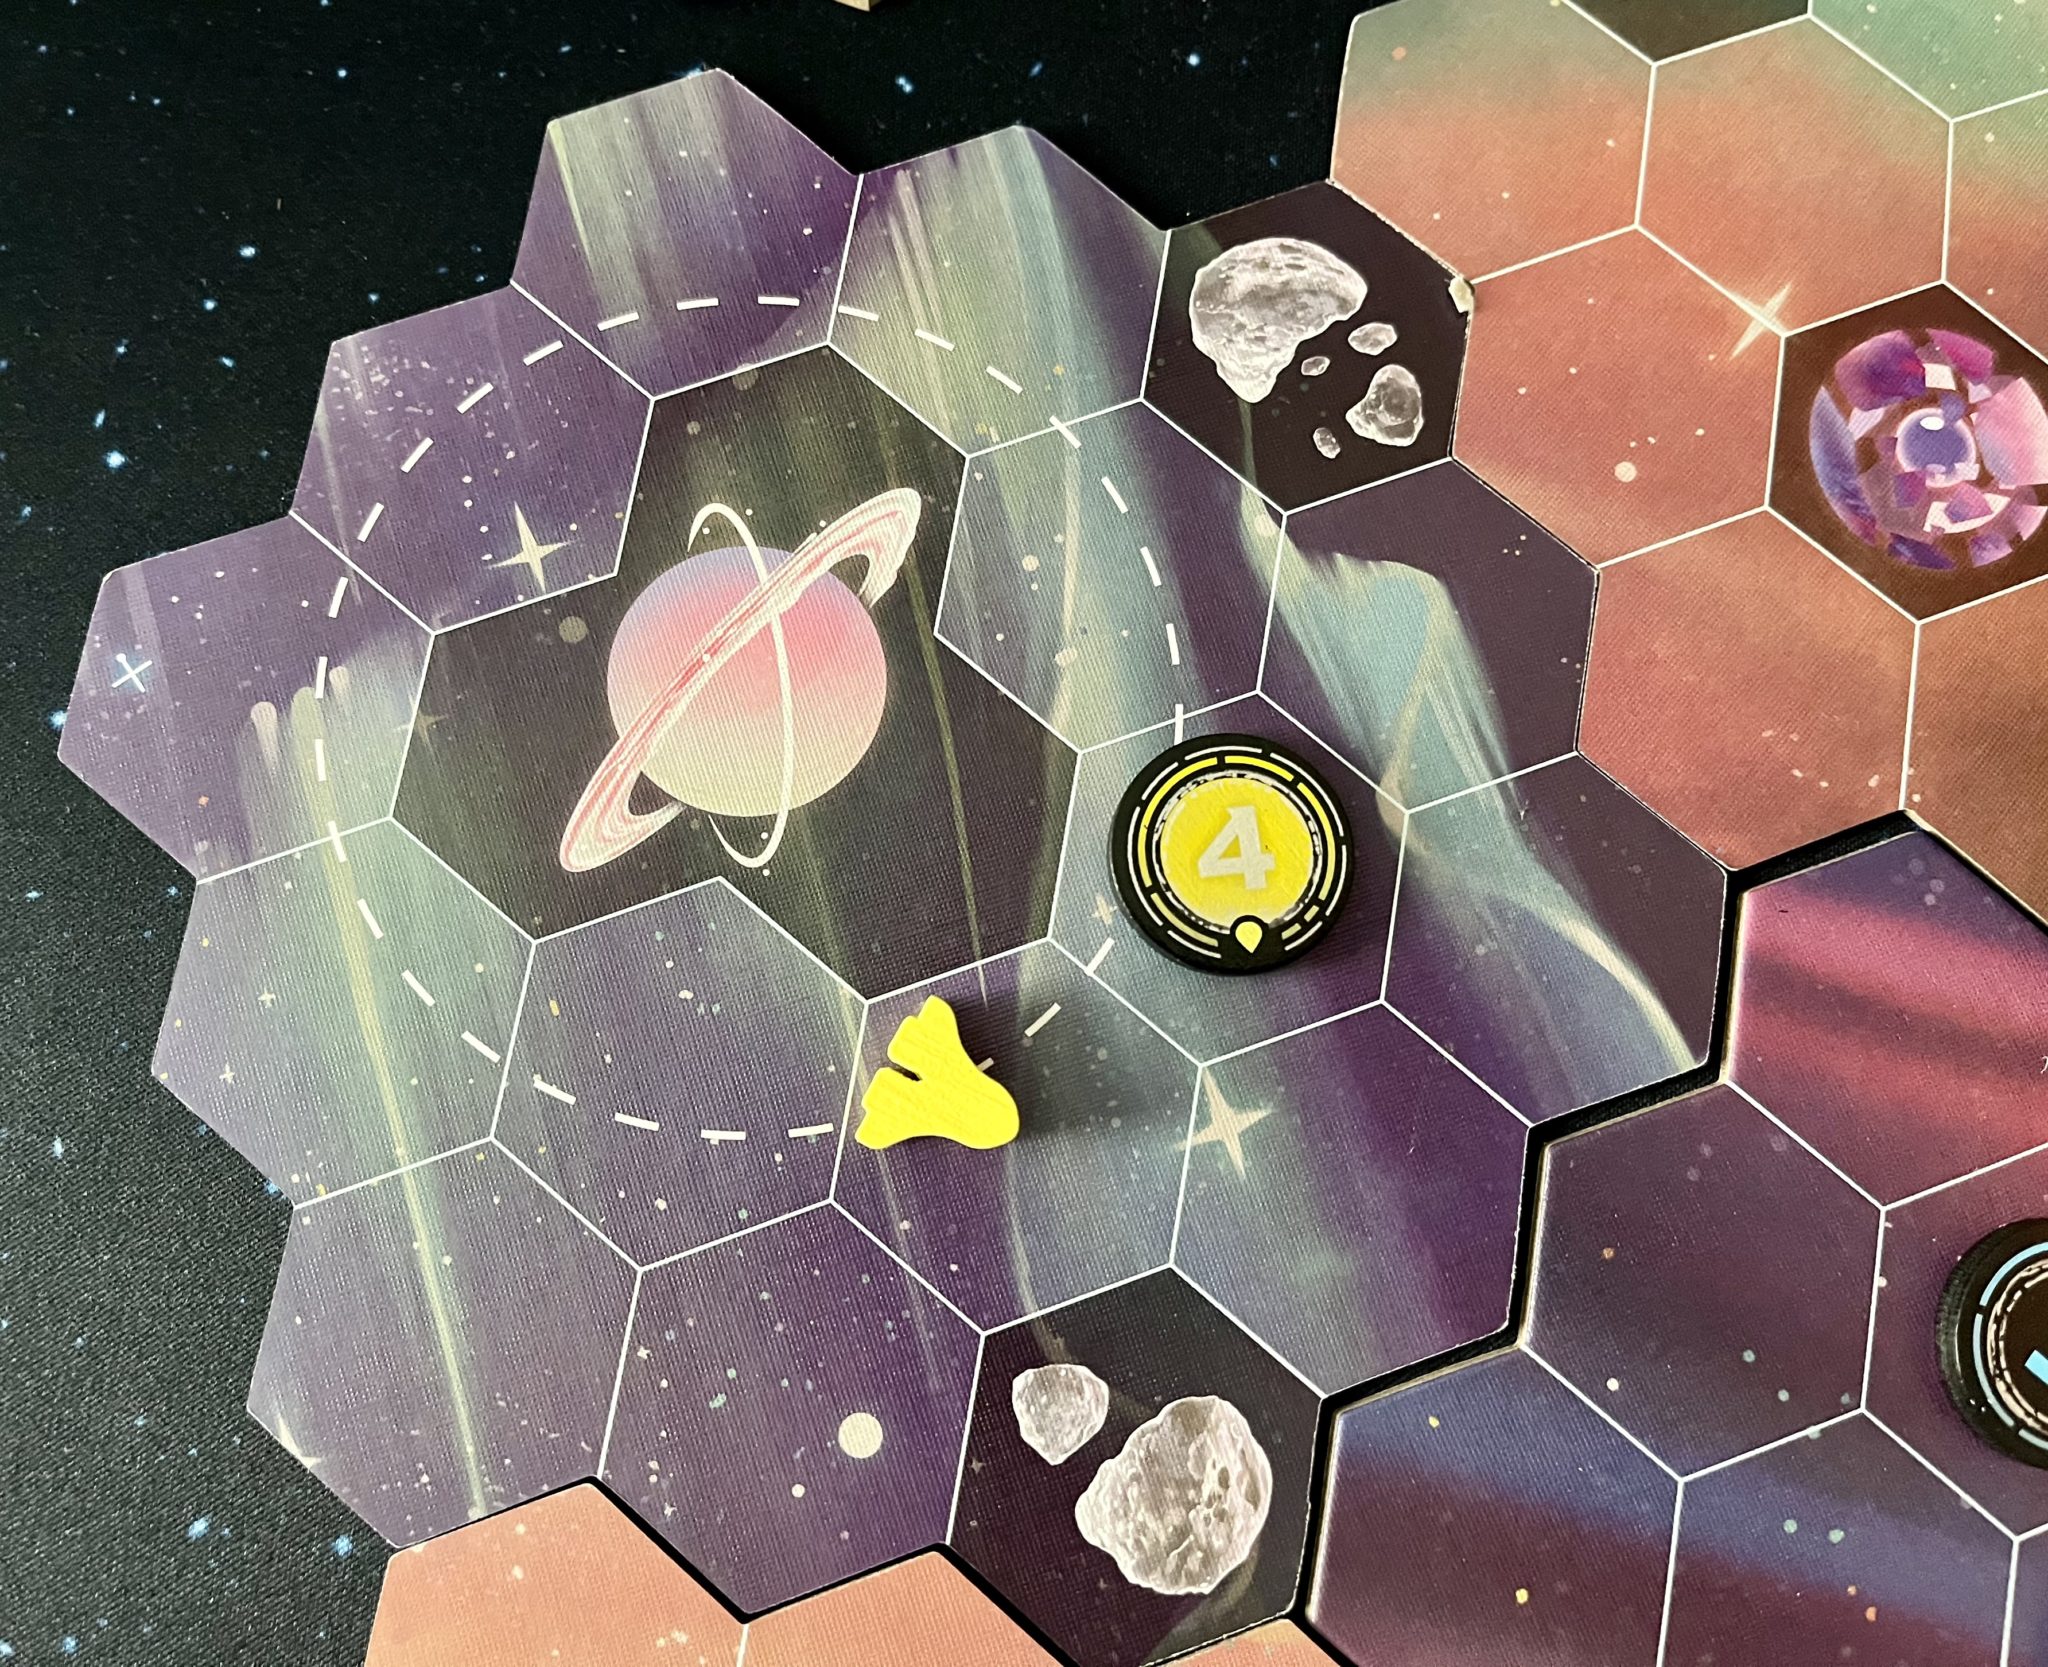 Wormholes yellow player on orbit